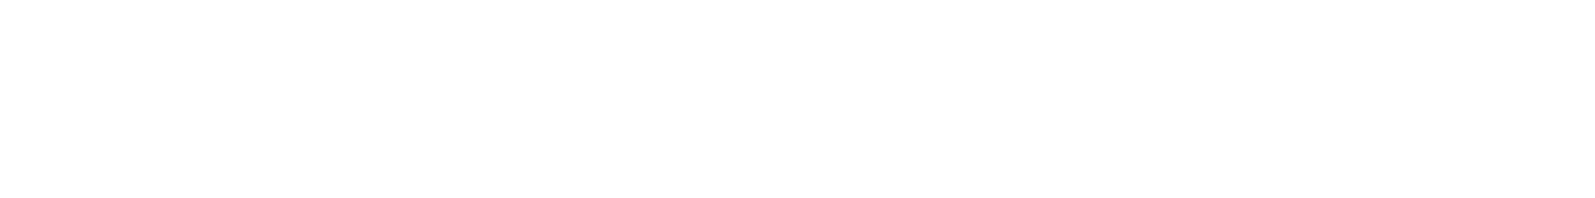 C&D International Investment Group Logo groß für dunkle Hintergründe (transparentes PNG)